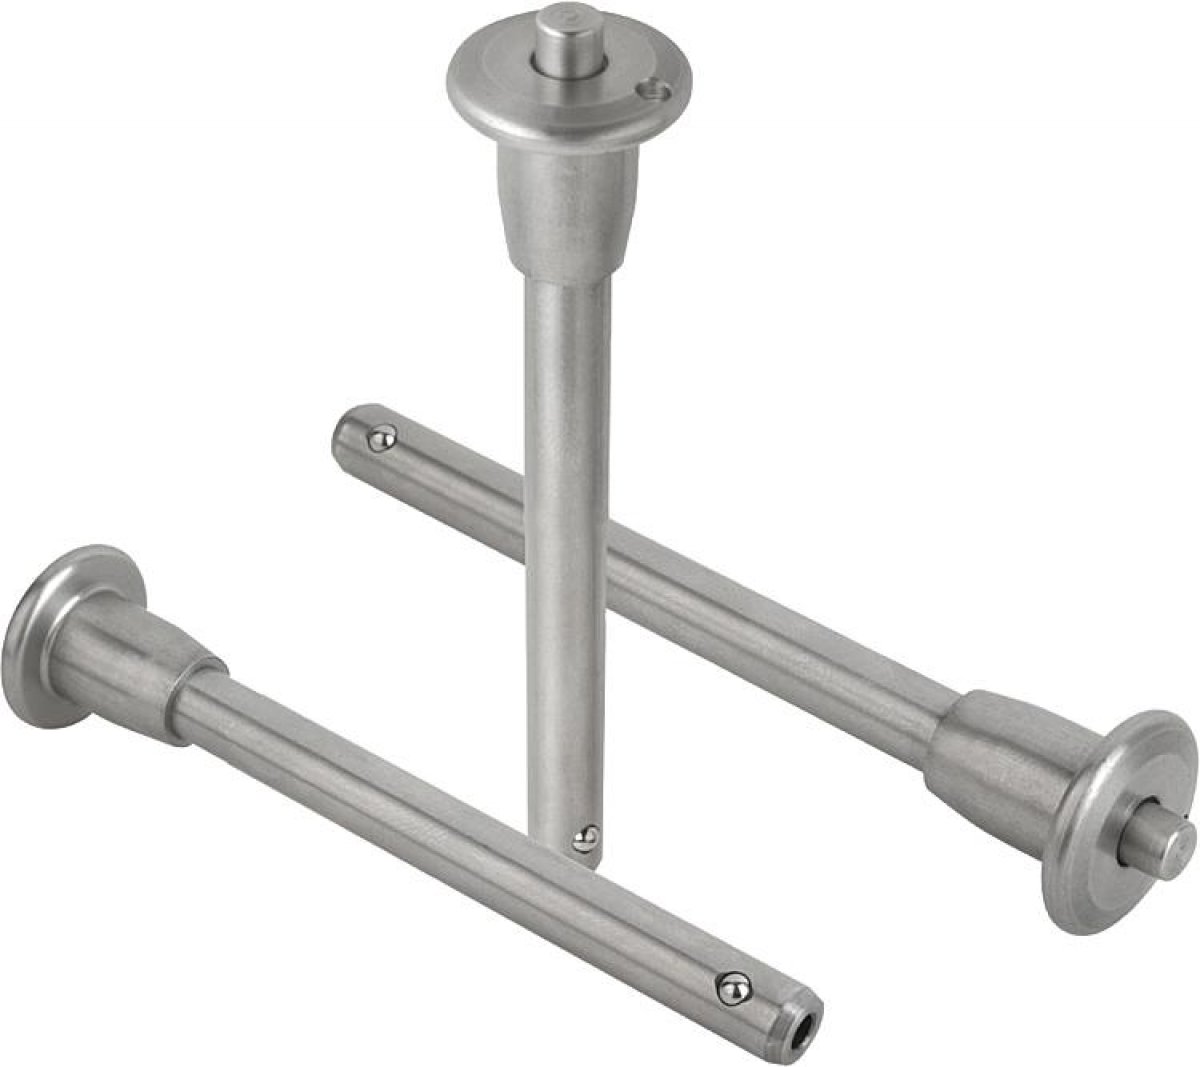 Ball lock pins with mushroom grip stainless steel